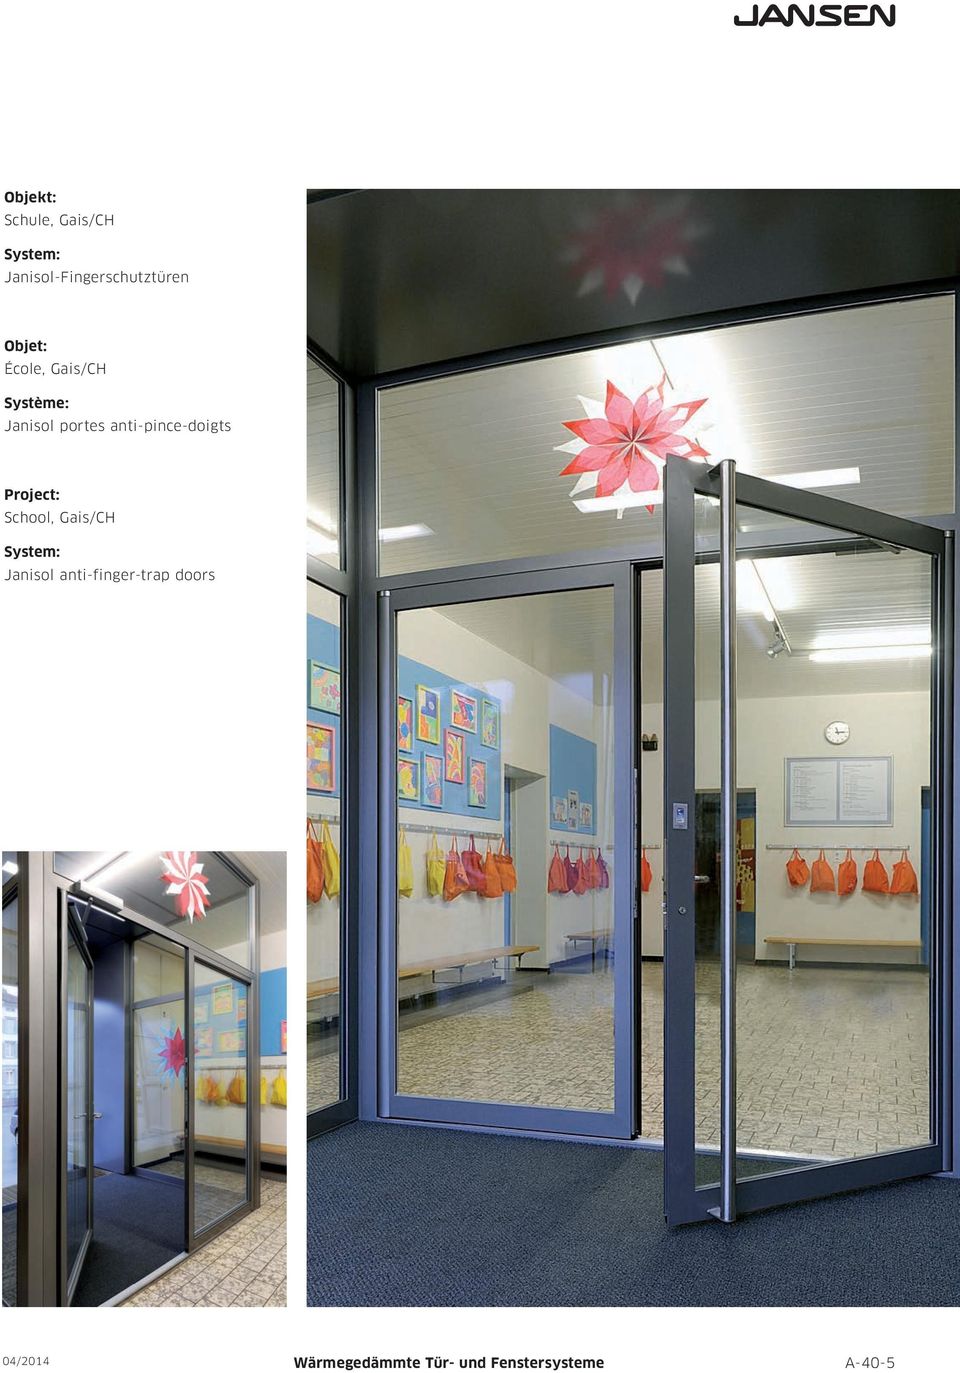 School, Gais/CH Janisol anti-finger-trap doors